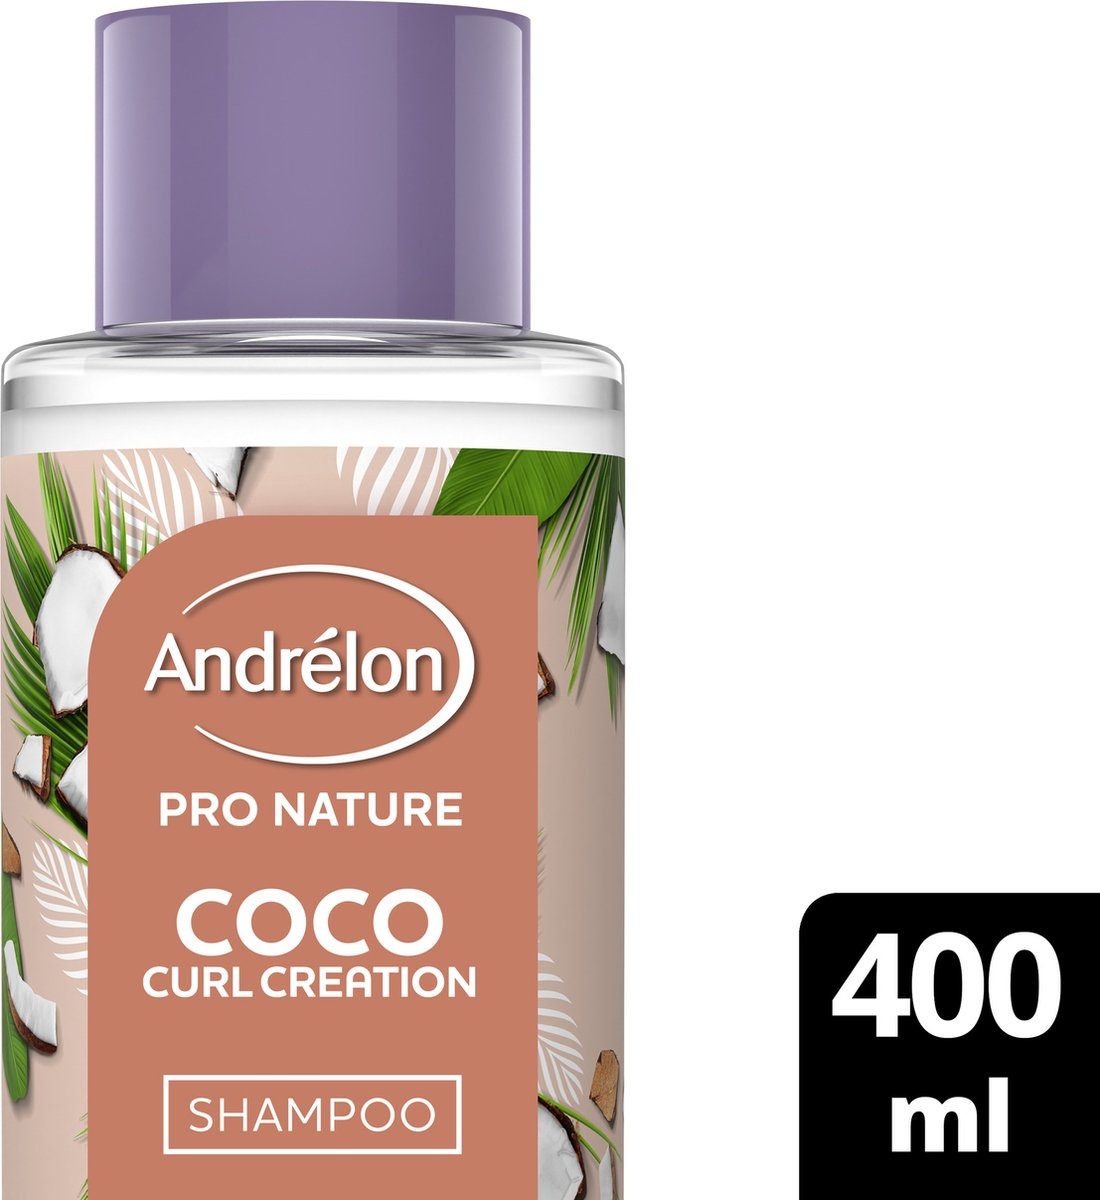 Andrélon Pro Nature Coco Curl Creation Shampoo 400 ml - Verpakking beschadigd